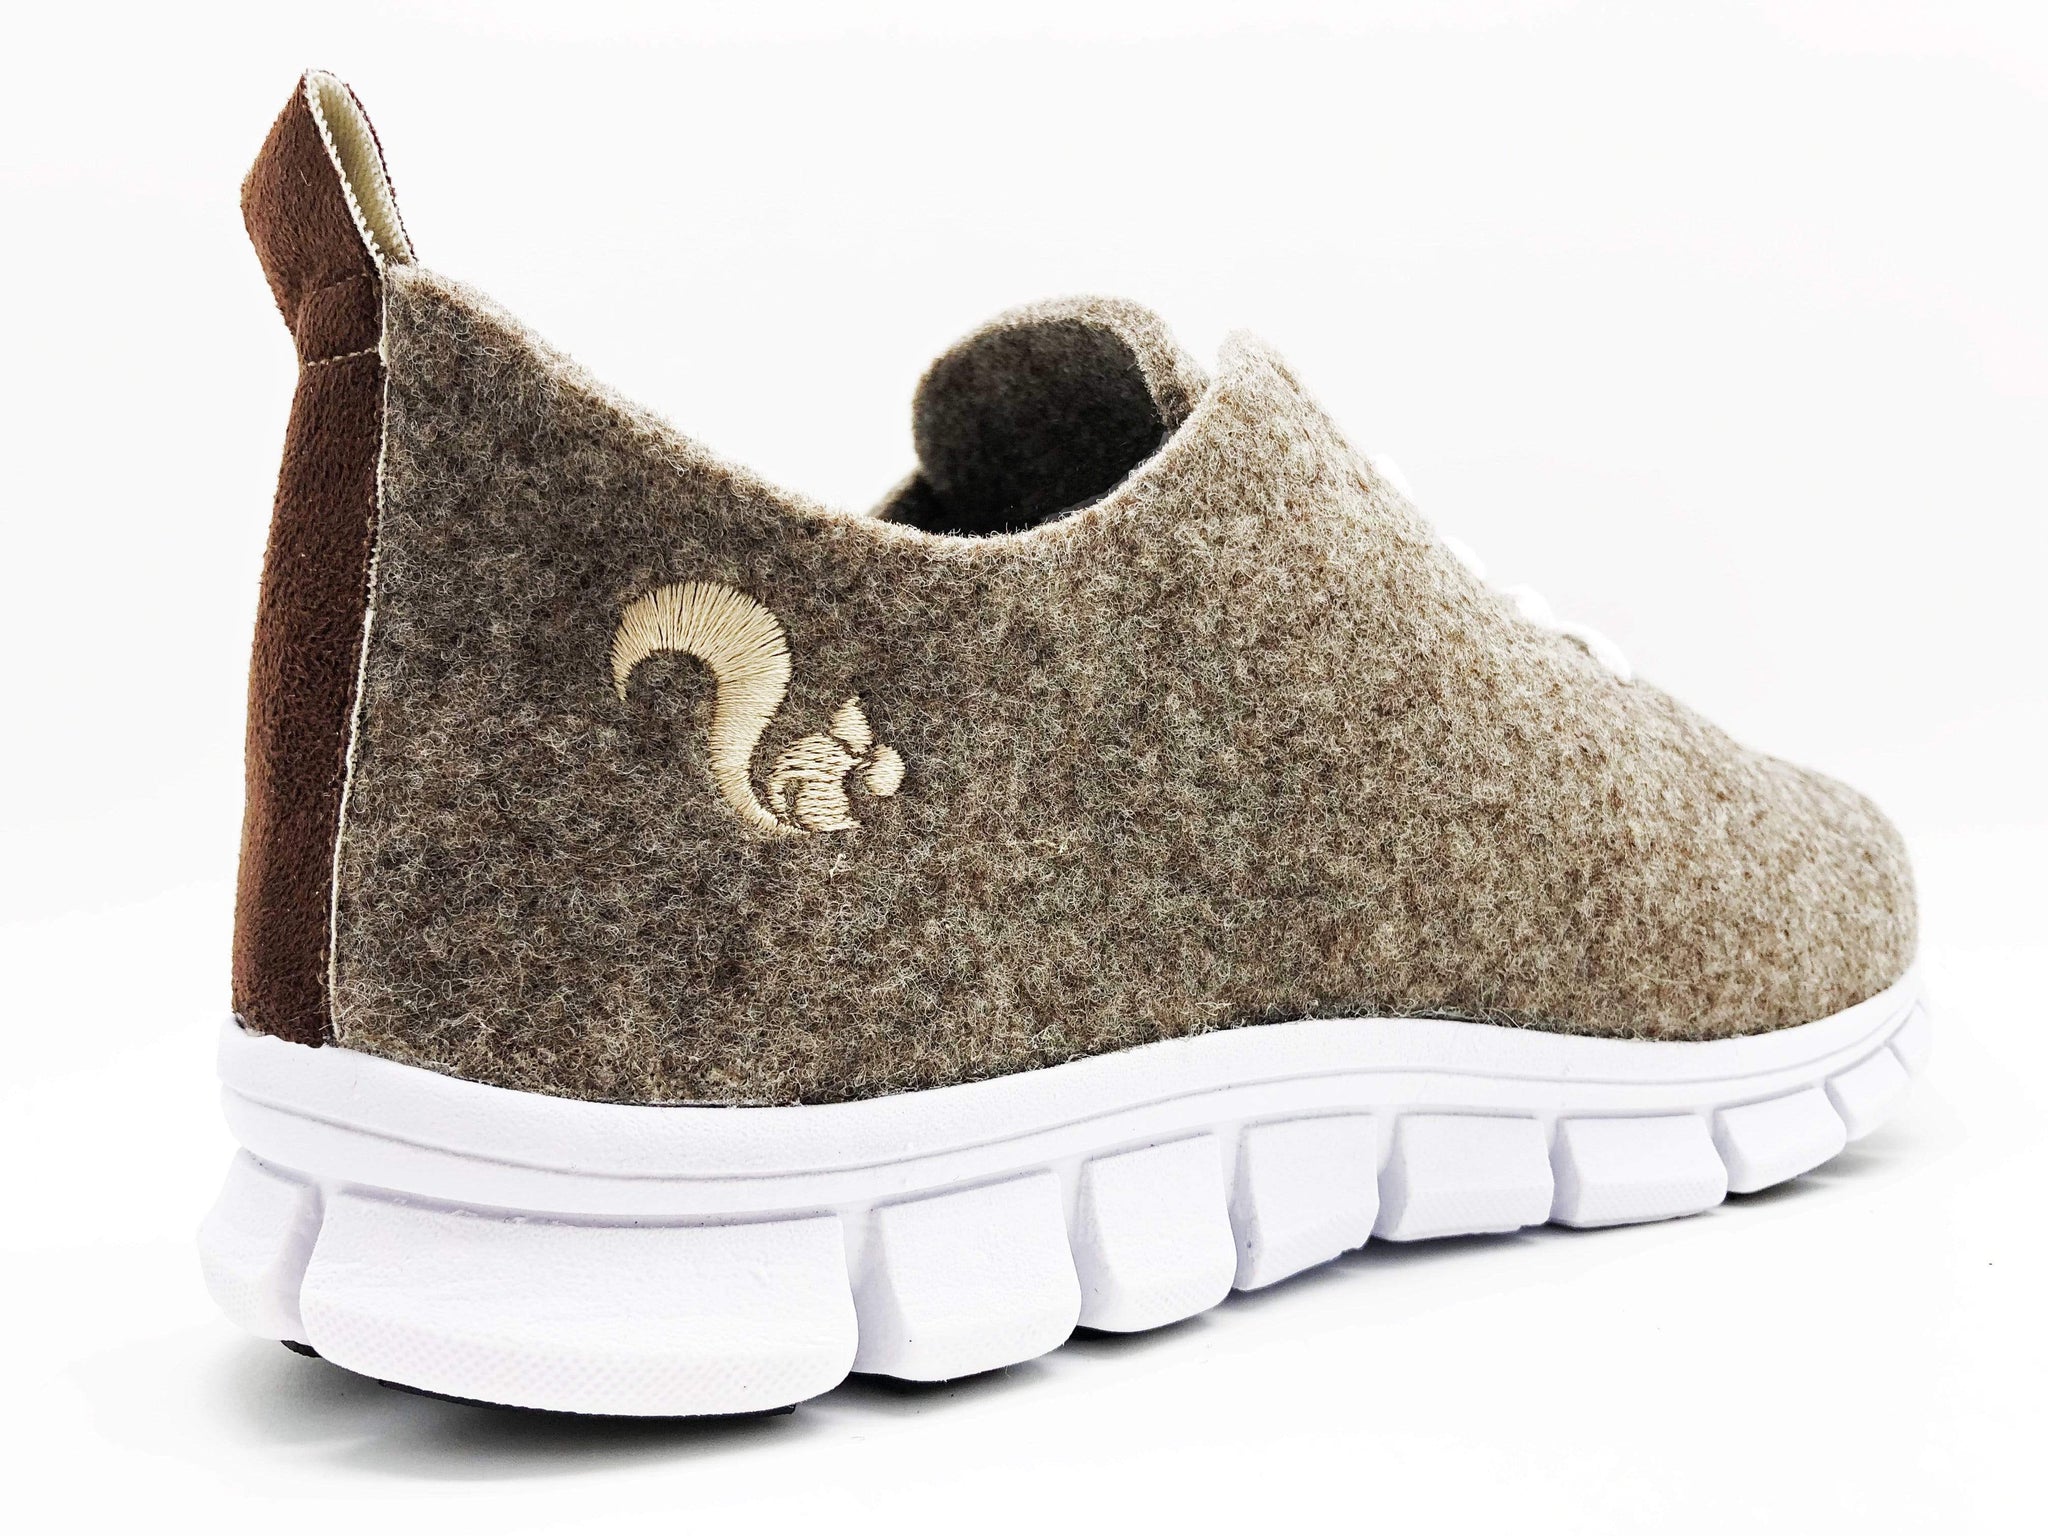 K&T Handels- und Unternehmensberatung GmbH sko PET Runner Sneaker i genbrugte PET-flasker. bæredygtig modeetisk mode